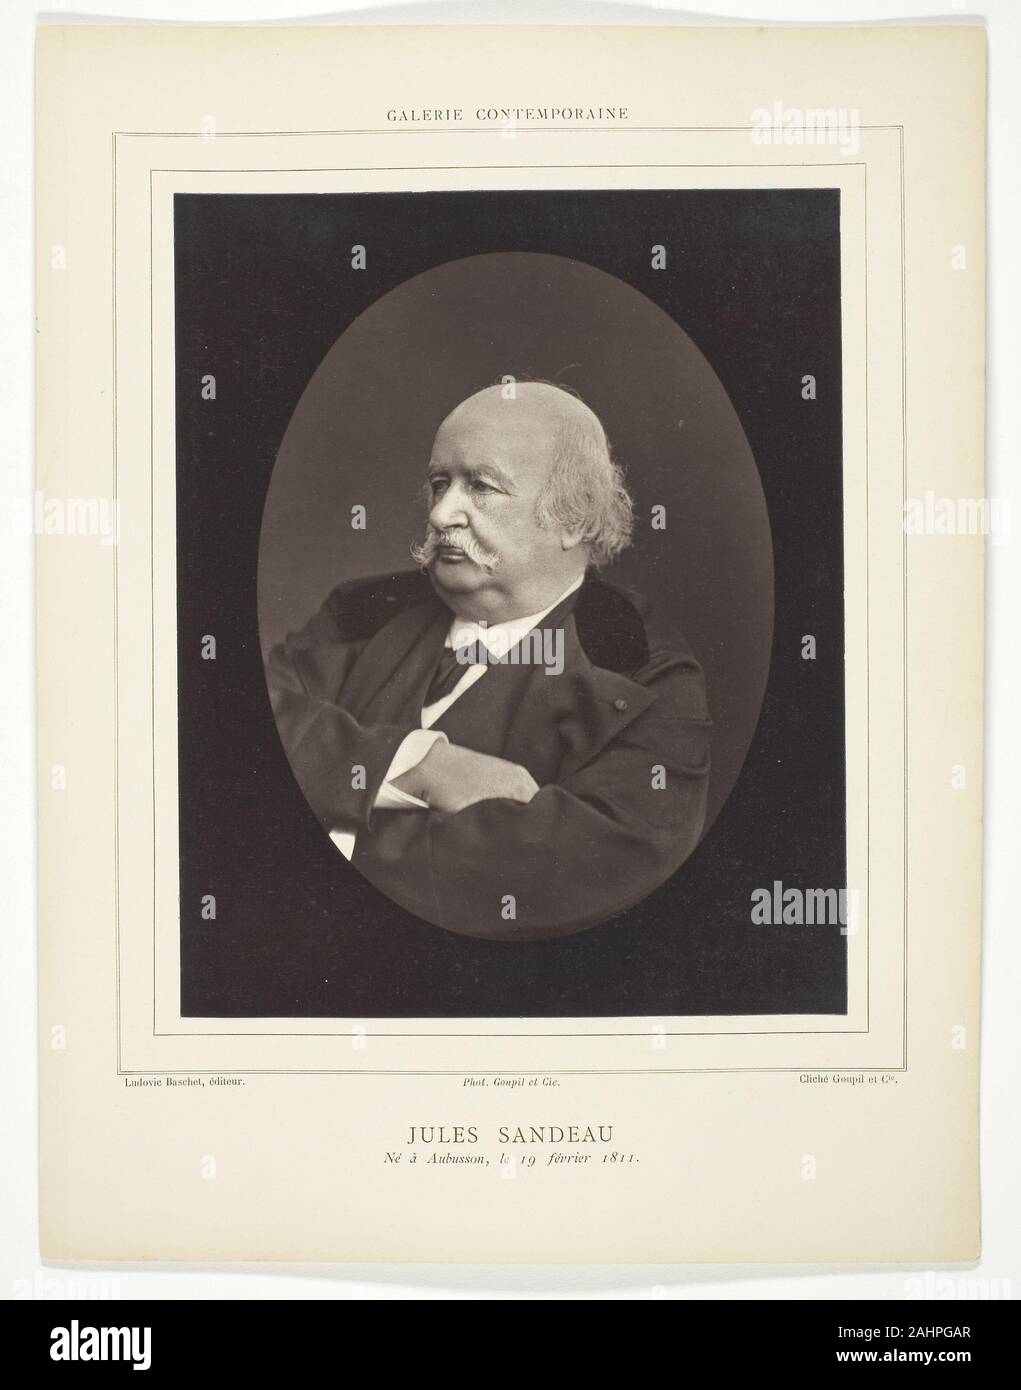 Goupil et Cie.. Jules Sandeau. 1875–1885. France. Woodburytype, from the periodical “Galerie Contemporaine Littéraire, Artistique” Stock Photo